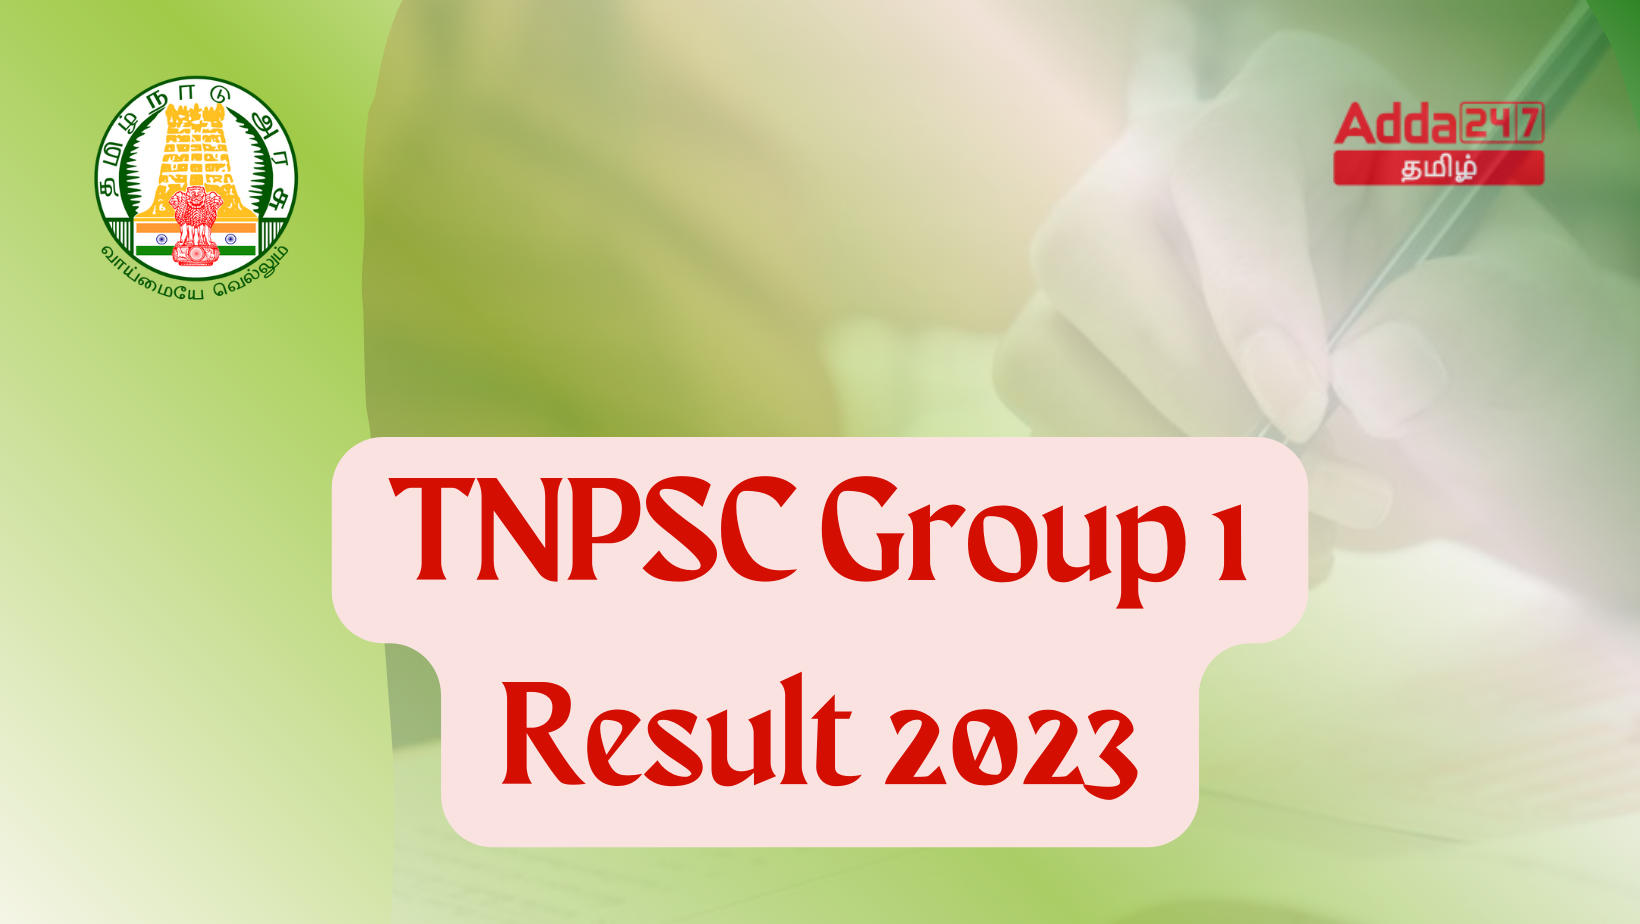 TNPSC Group 1 Result 2023 Out, Download PDF Link, Cut-Off_30.1